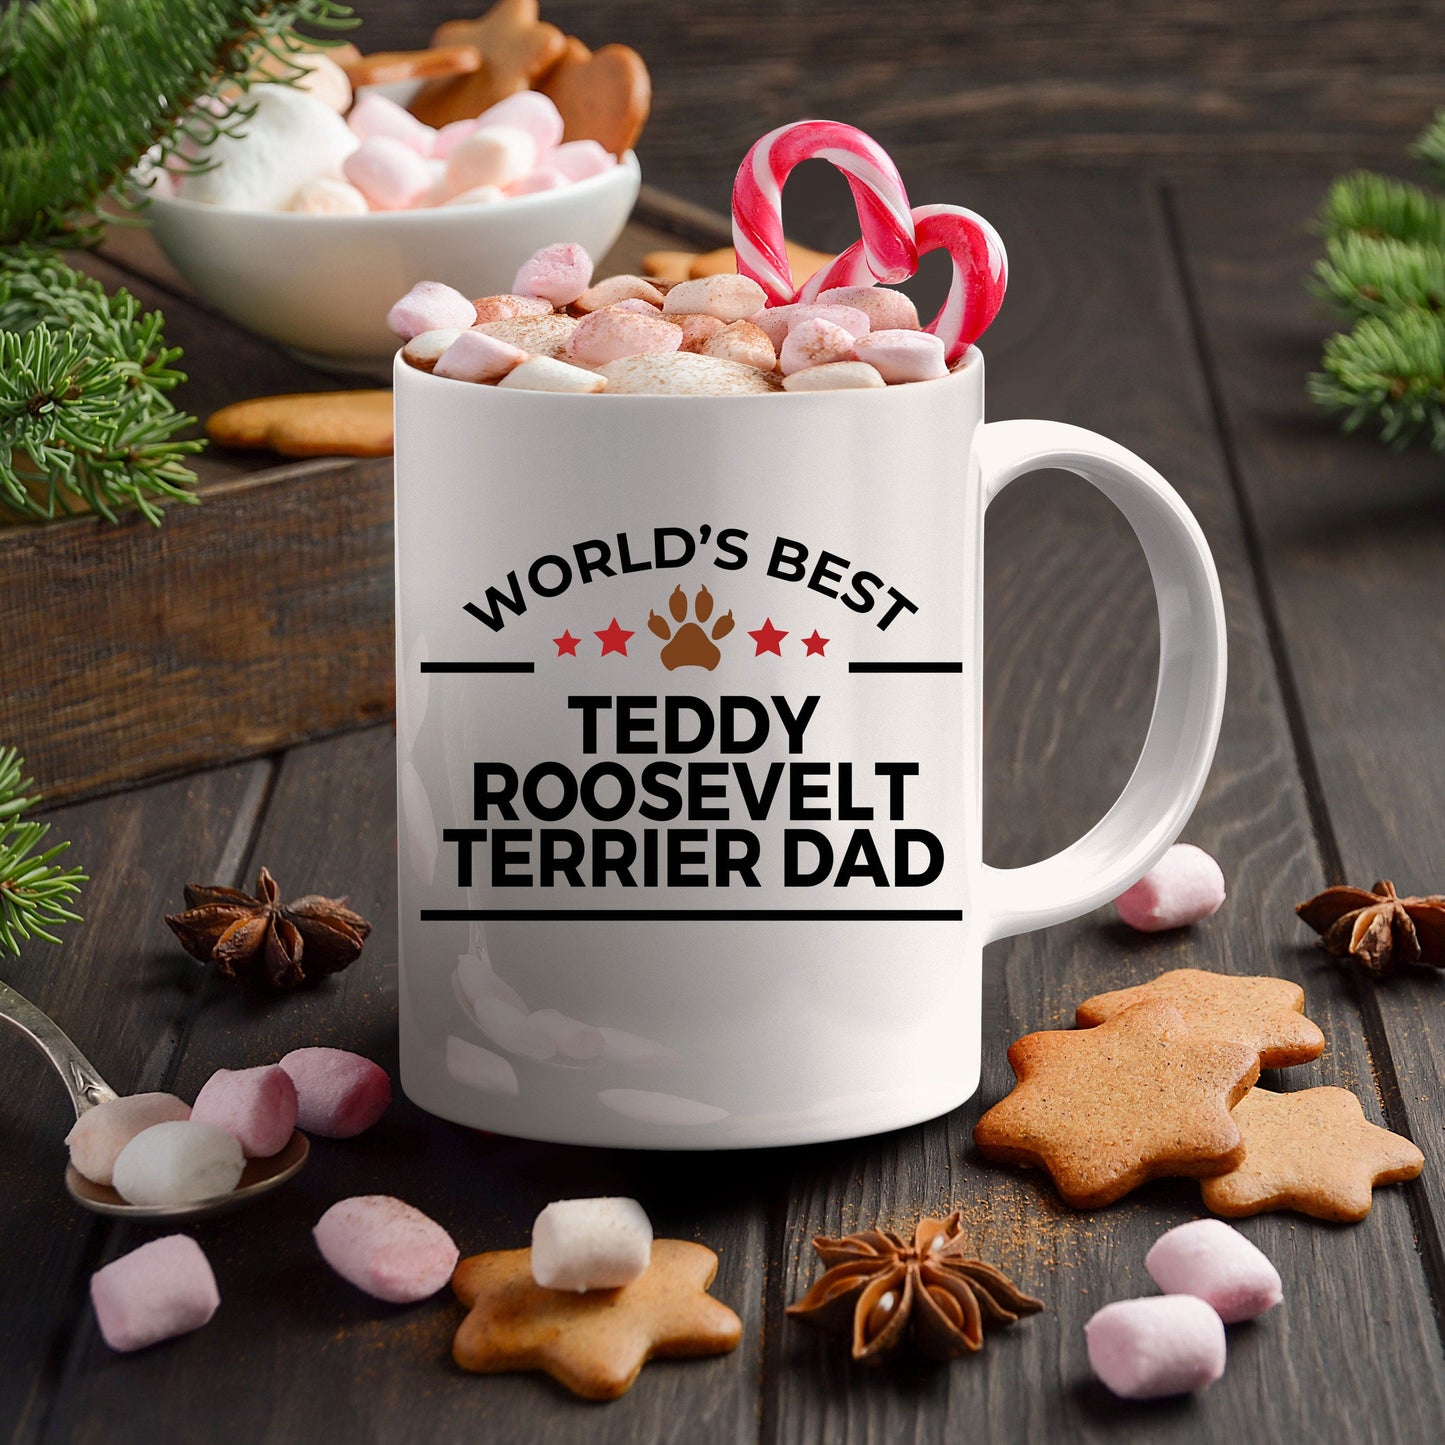 Teddy Roosevelt Terrier Dog Dad Coffee Mug